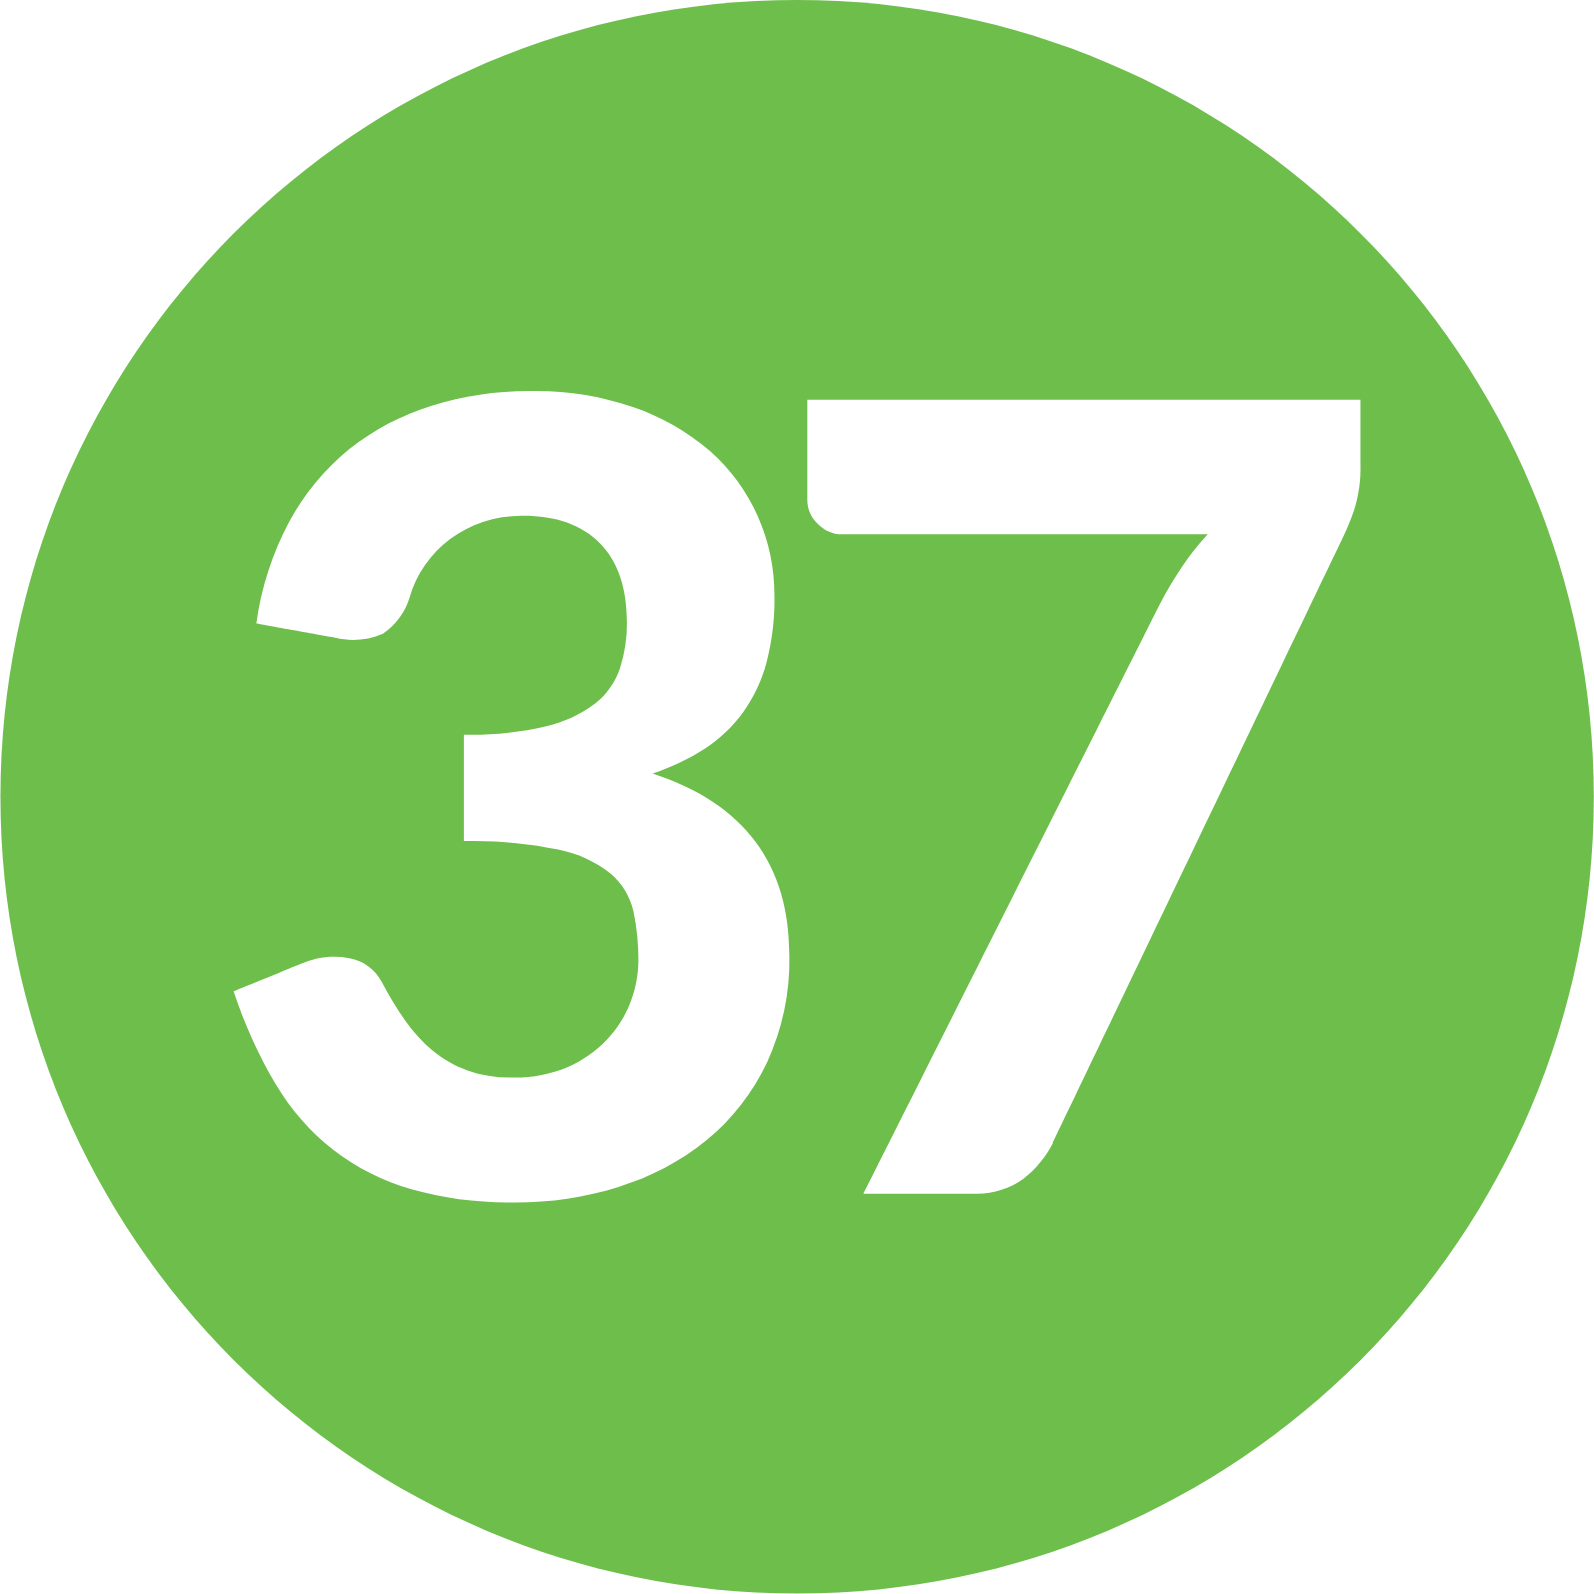 Science 37 logo (PNG transparent)